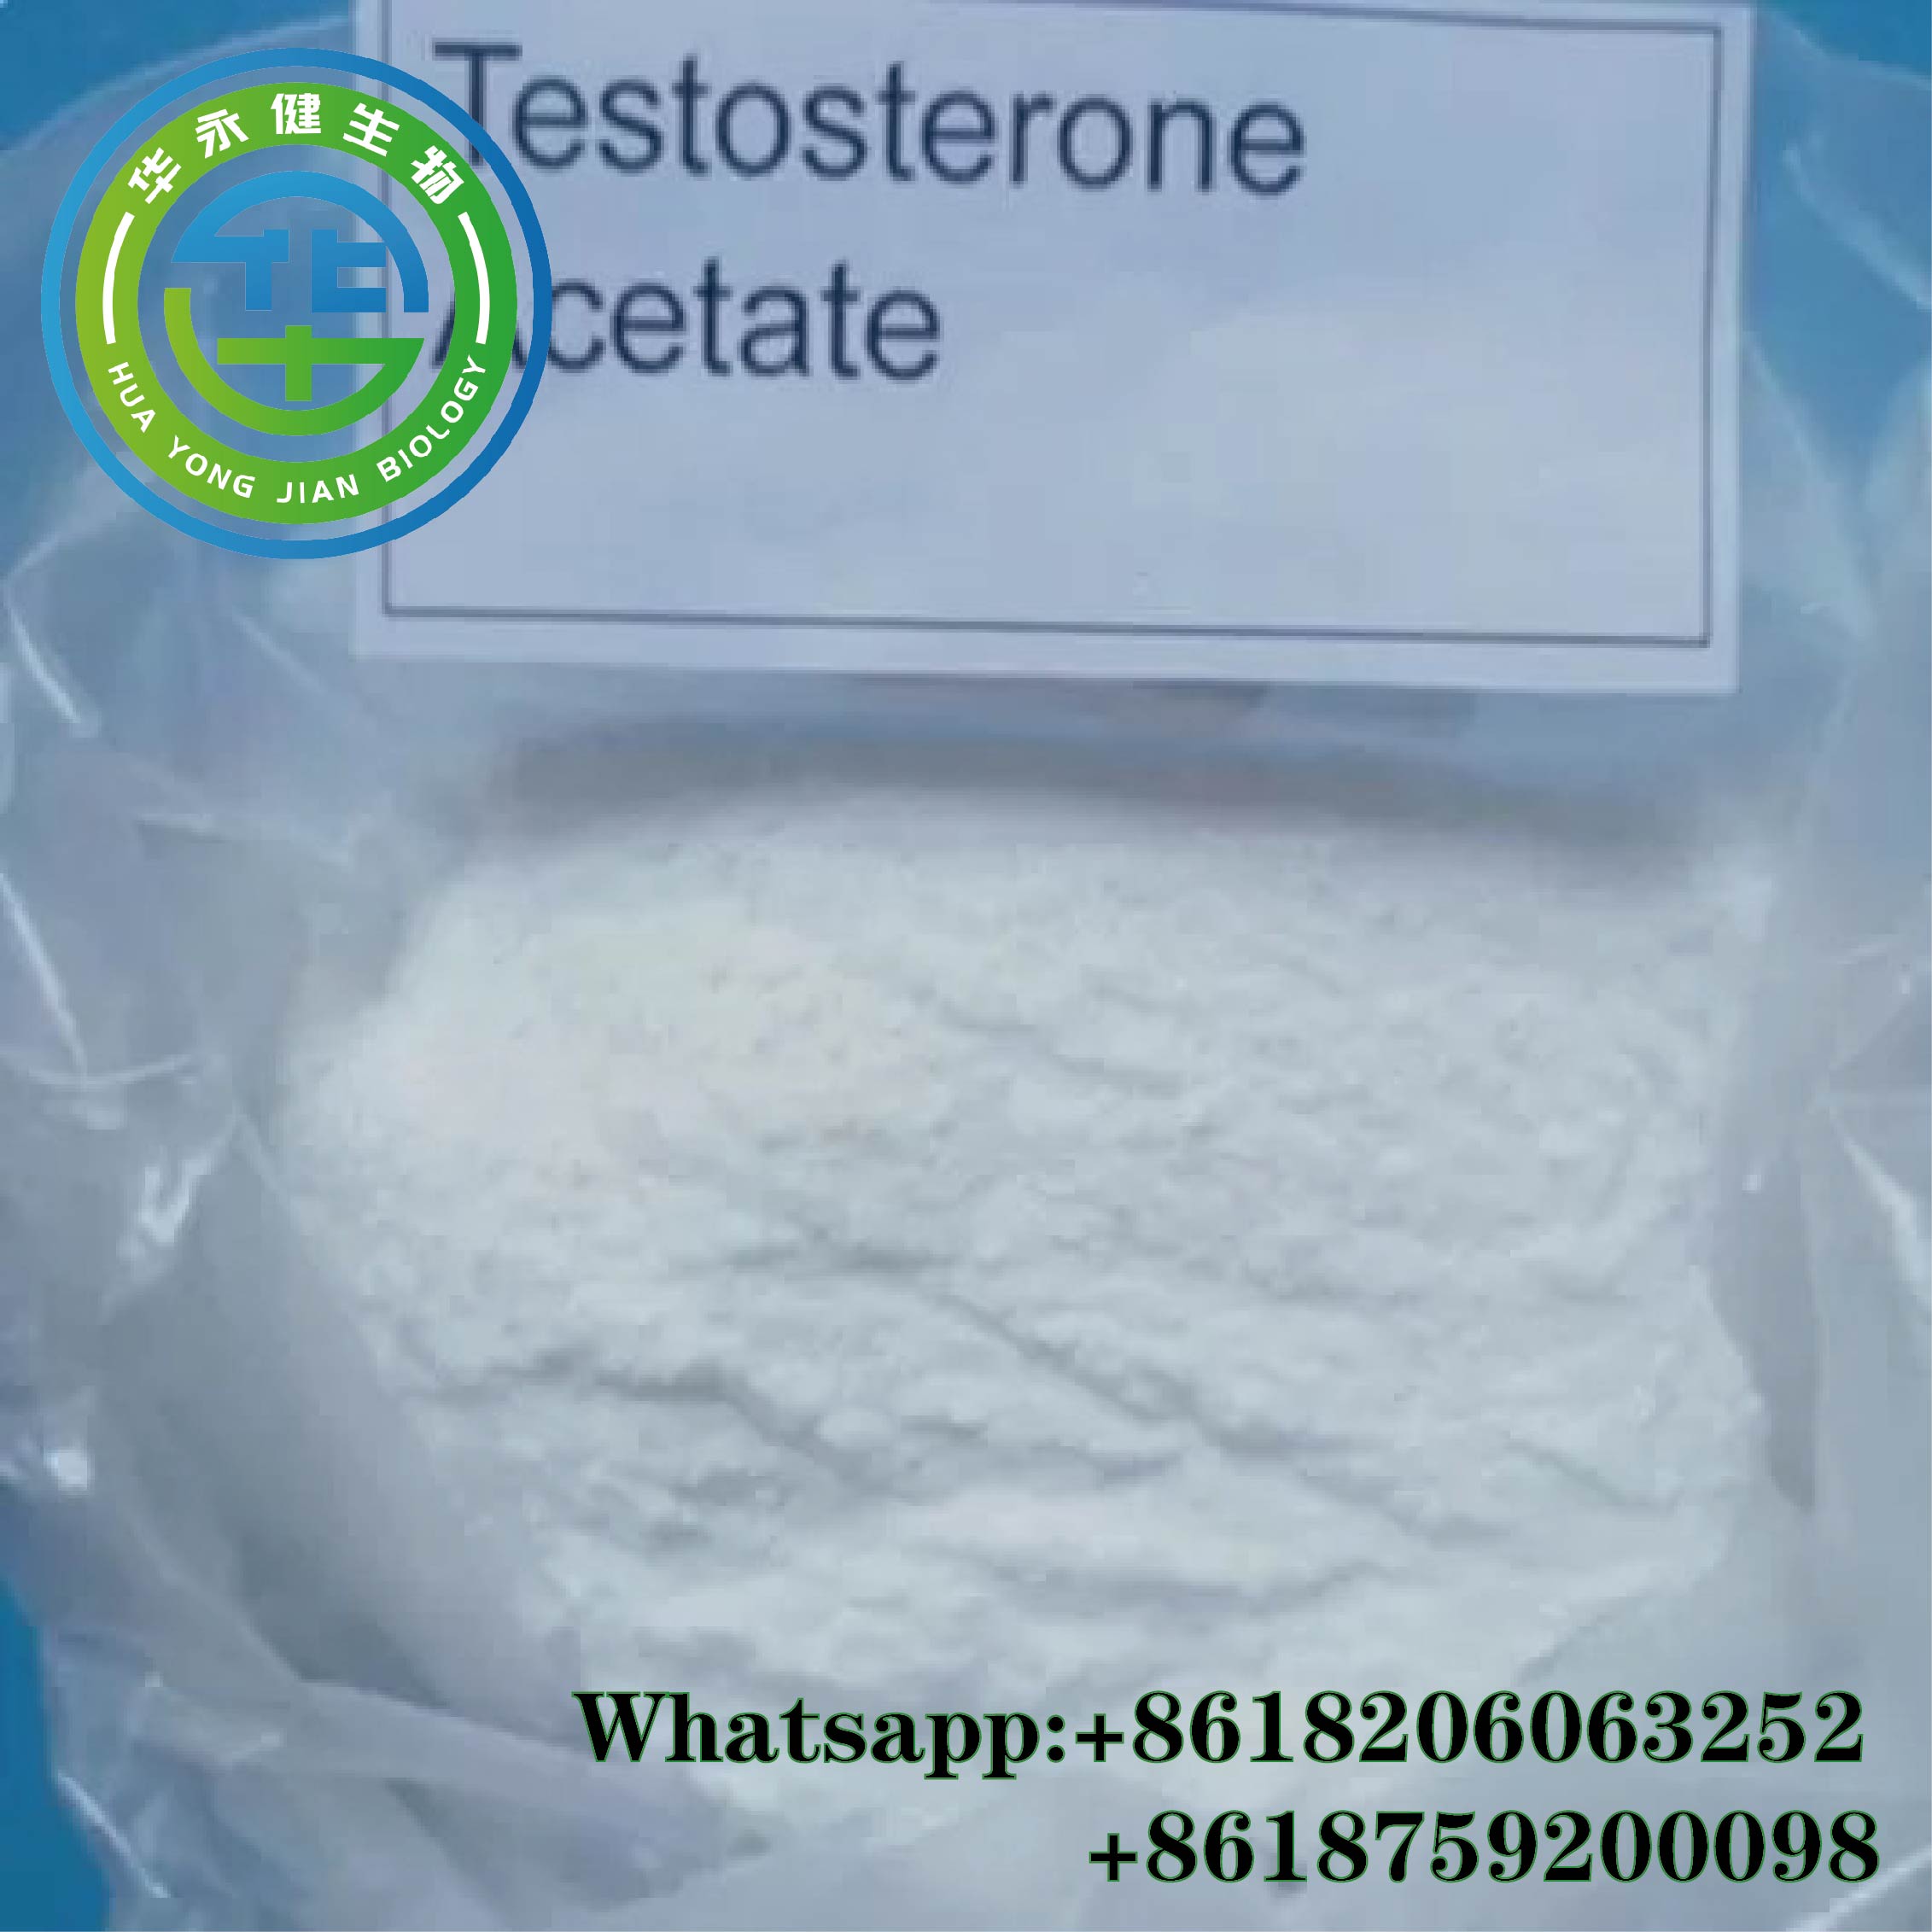 High Quality Short Ester Testosteron Powder Testosterone Acetate (Test A) Powder CasNO.1045-69-8